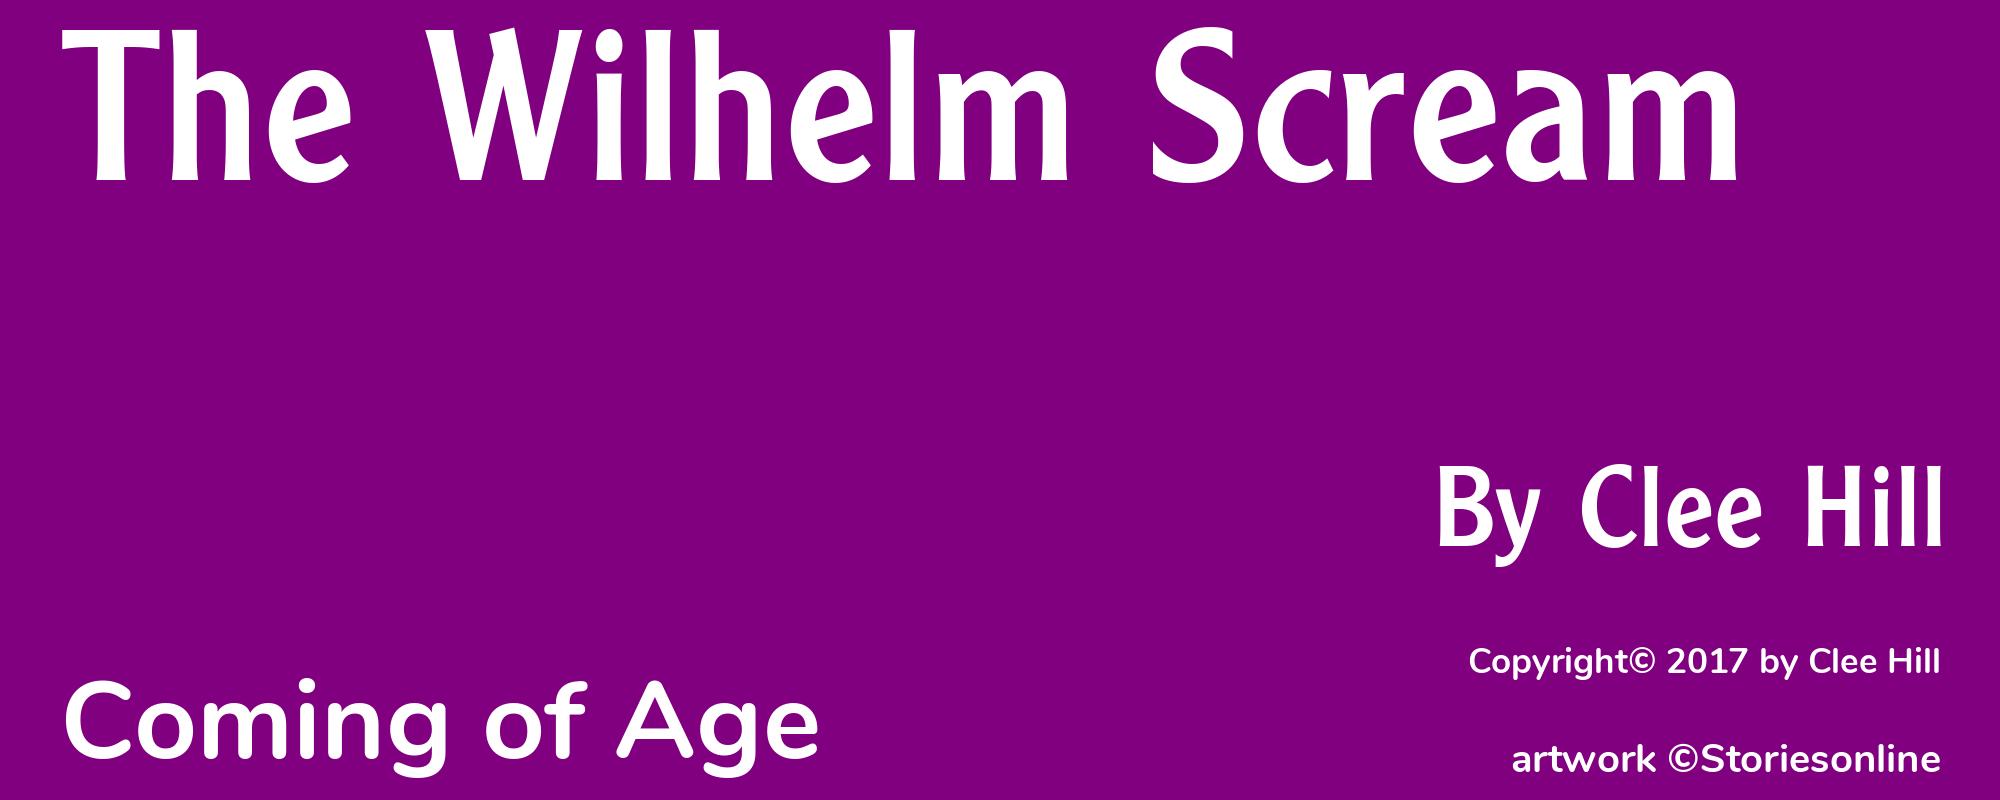 The Wilhelm Scream - Cover